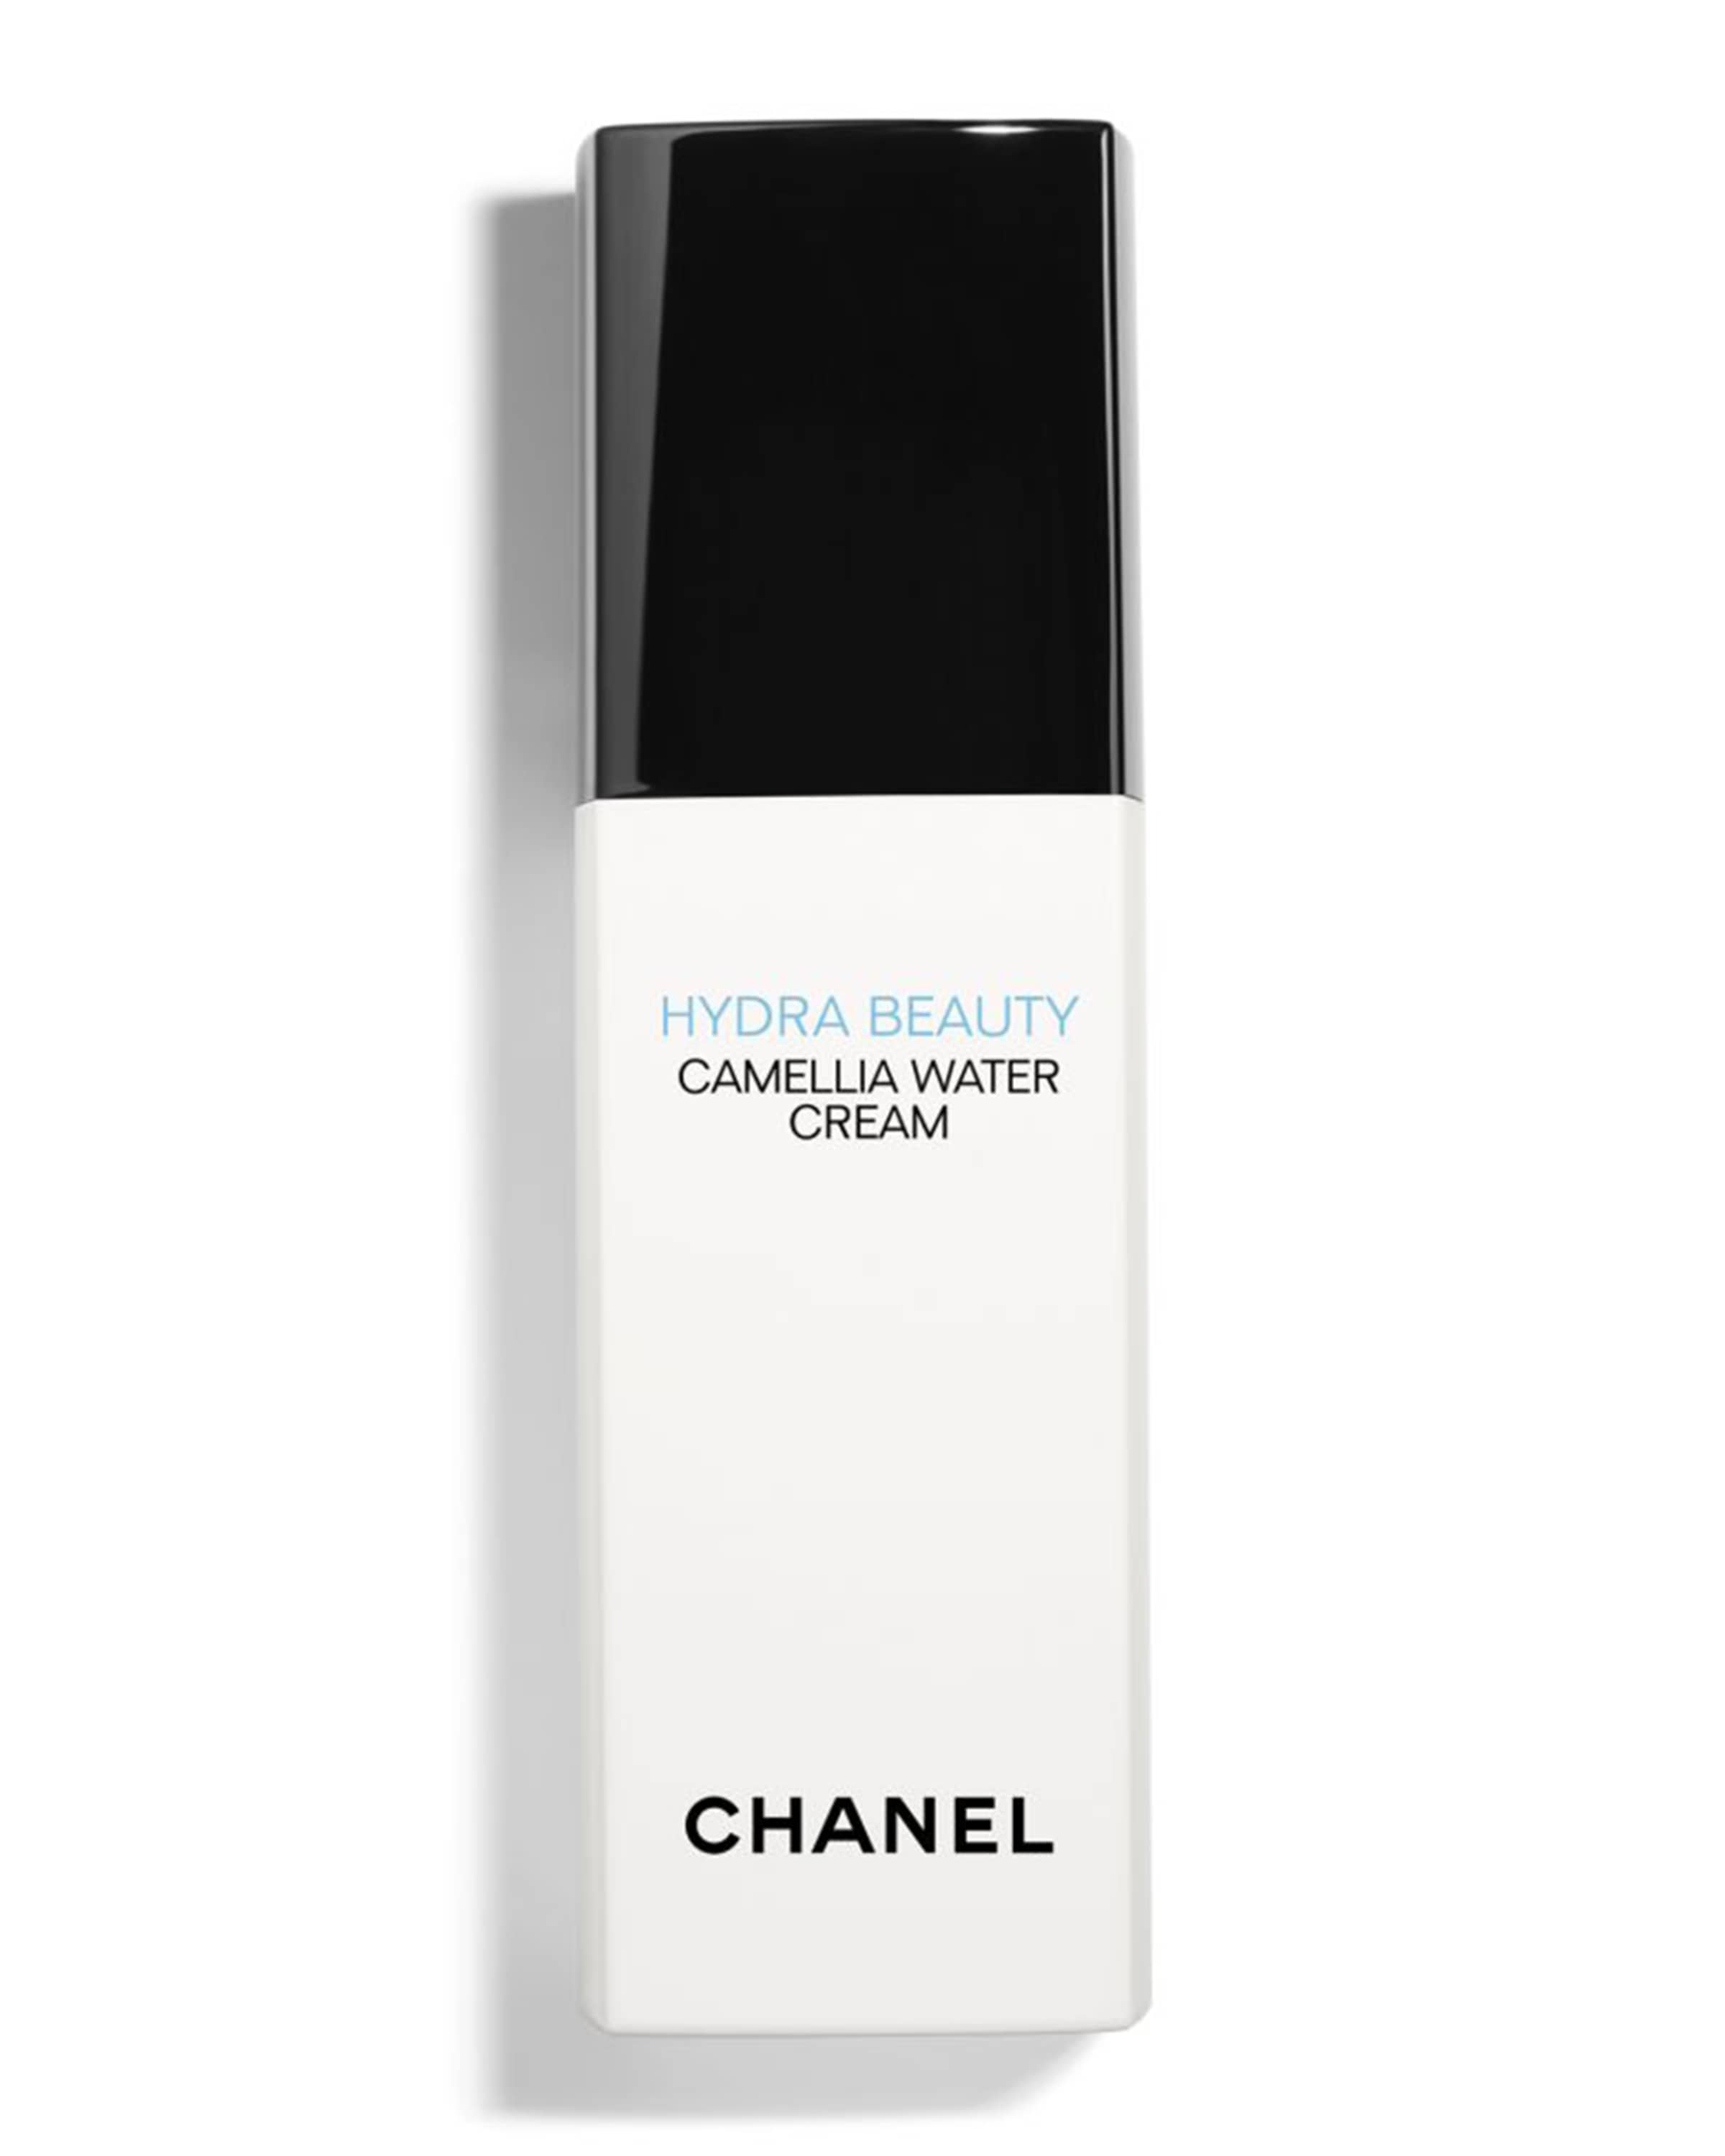 CHANEL HYDRA BEAUTY CAMELLIA WATER CREAM ILLUMINATING HYDRATING FLUID,   oz./ 30 mL | Neiman Marcus